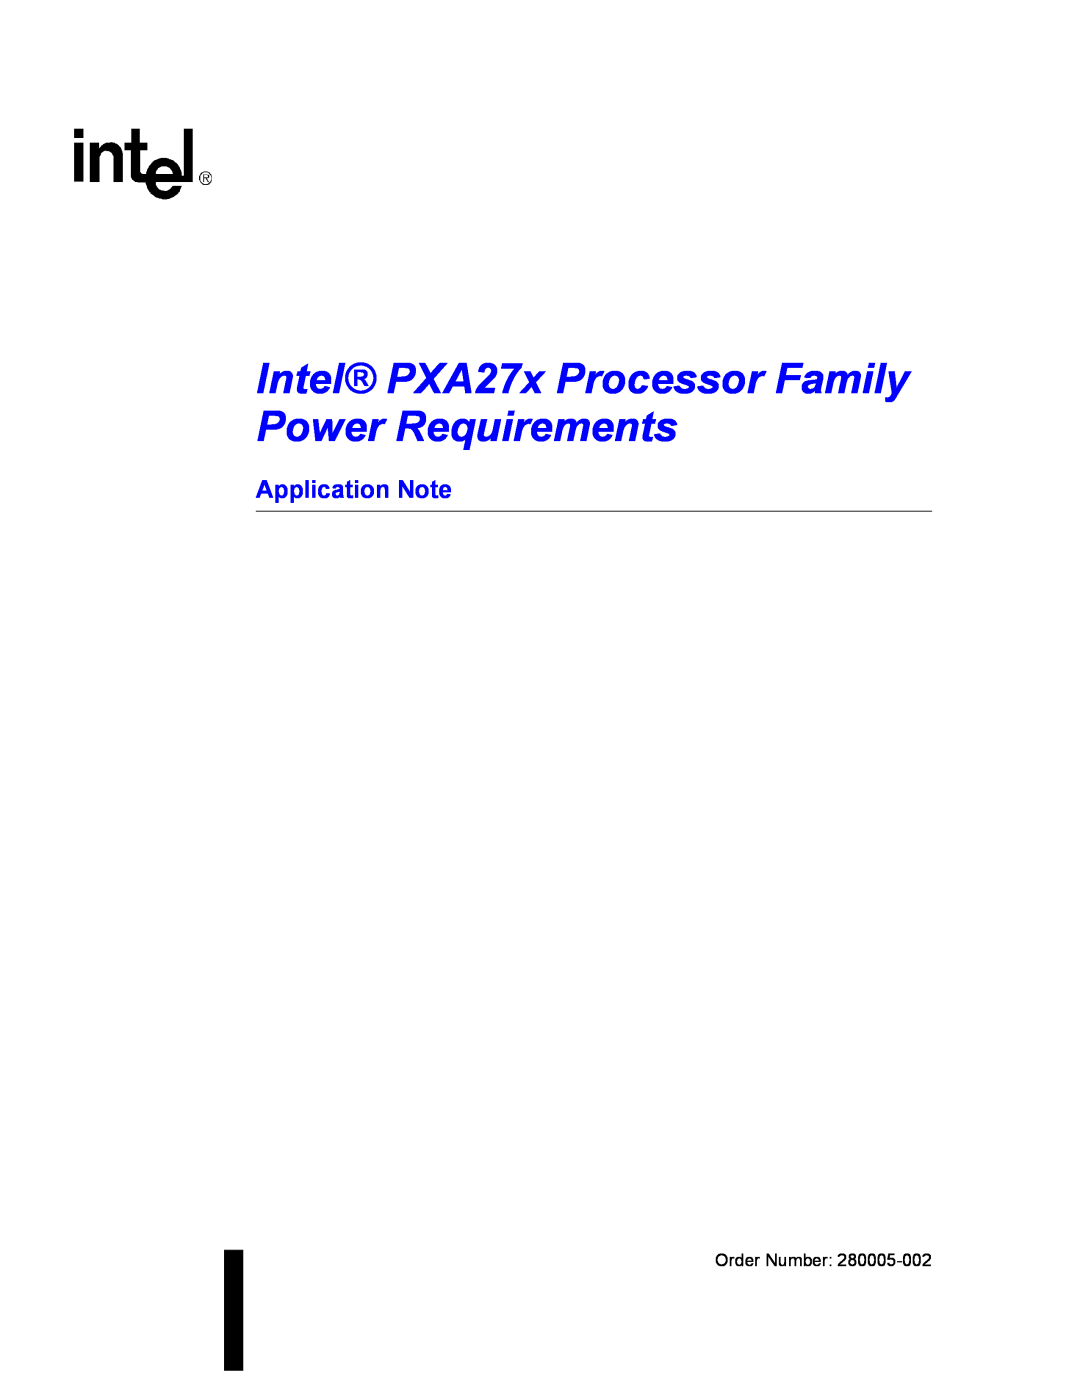 Intel PXA27X manual Intel PXA27x Processor Family Power Requirements, Application Note 